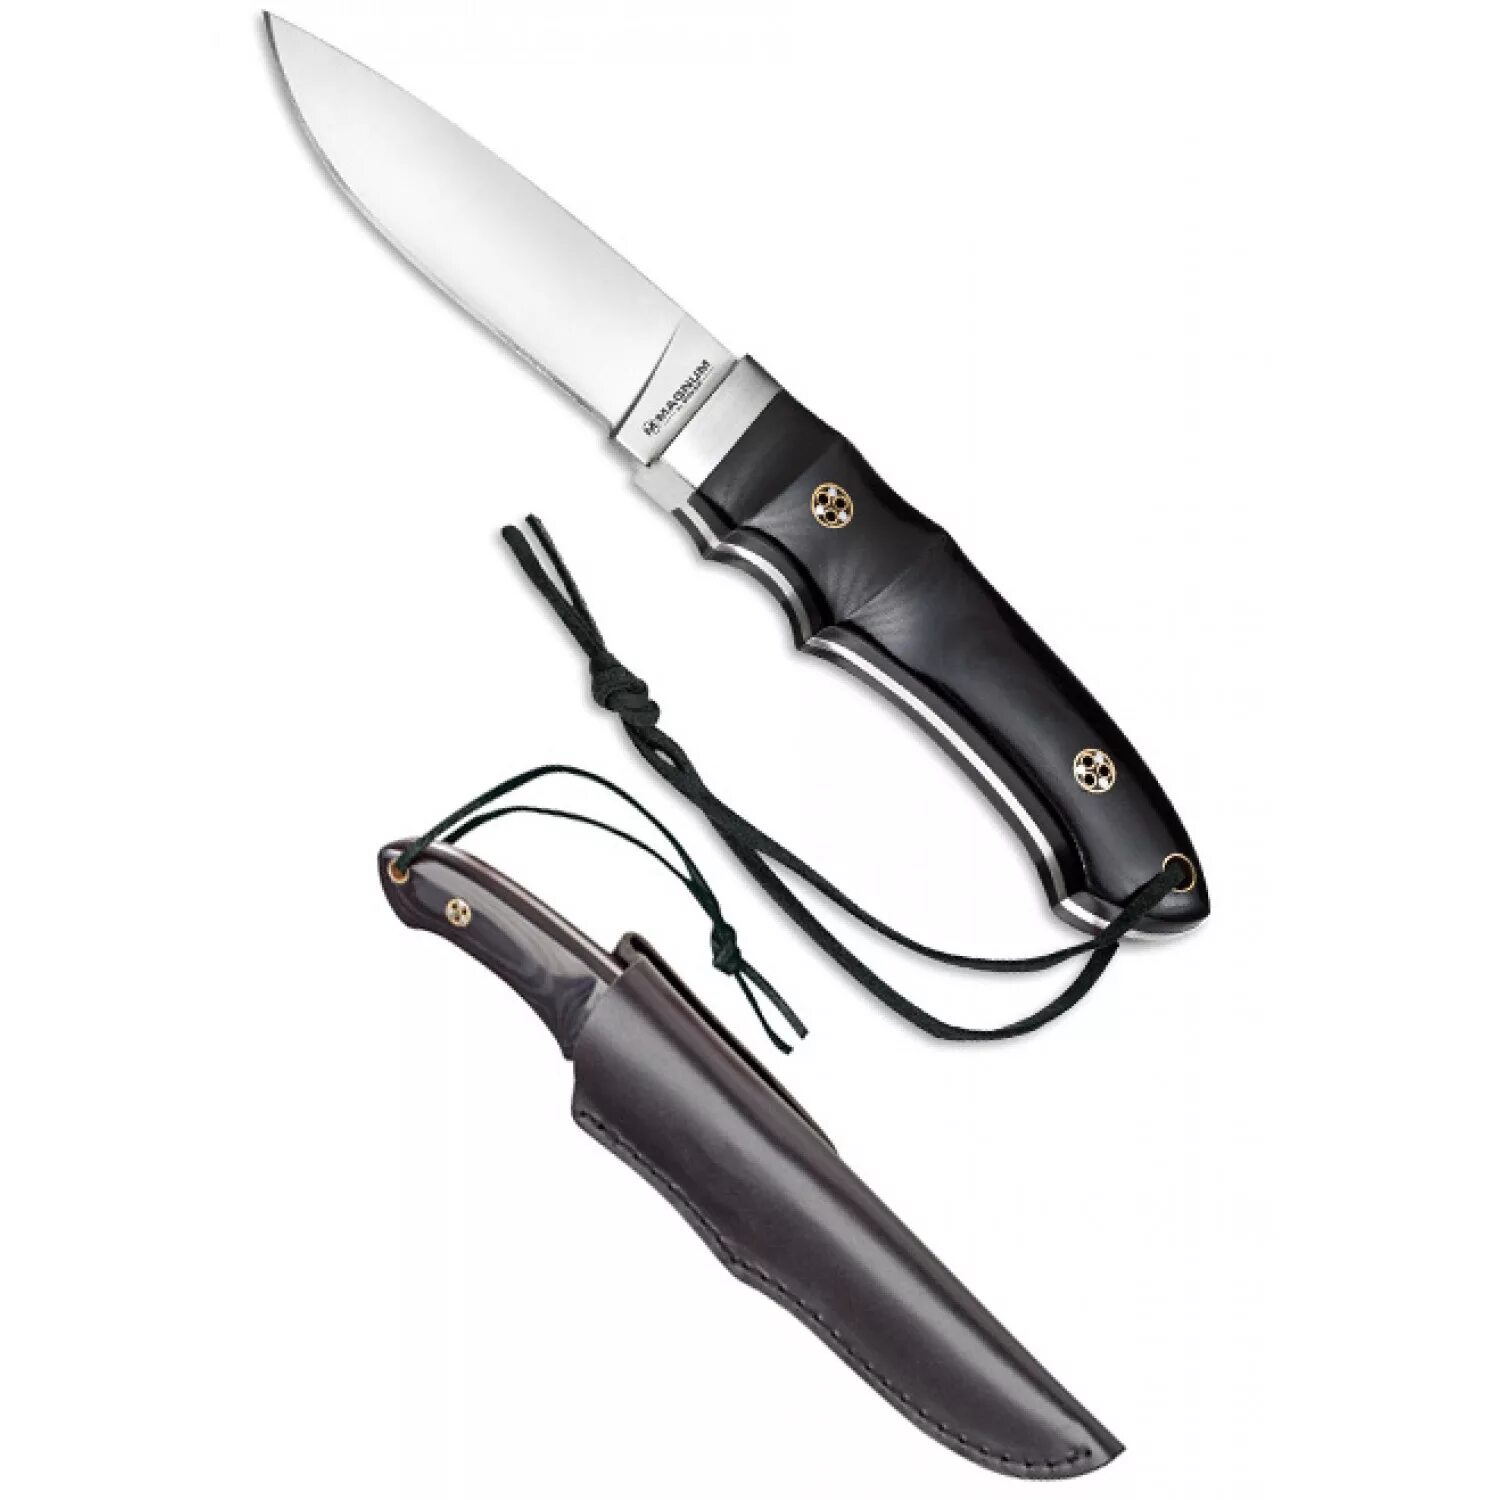 Купить фиксированный нож. Нож Boker модель 02sc099 Trail. Нож Магнум Бокер. Нож Бокер Магнум с фиксированным клинком. Ножи Boker с фиксированным клинком.